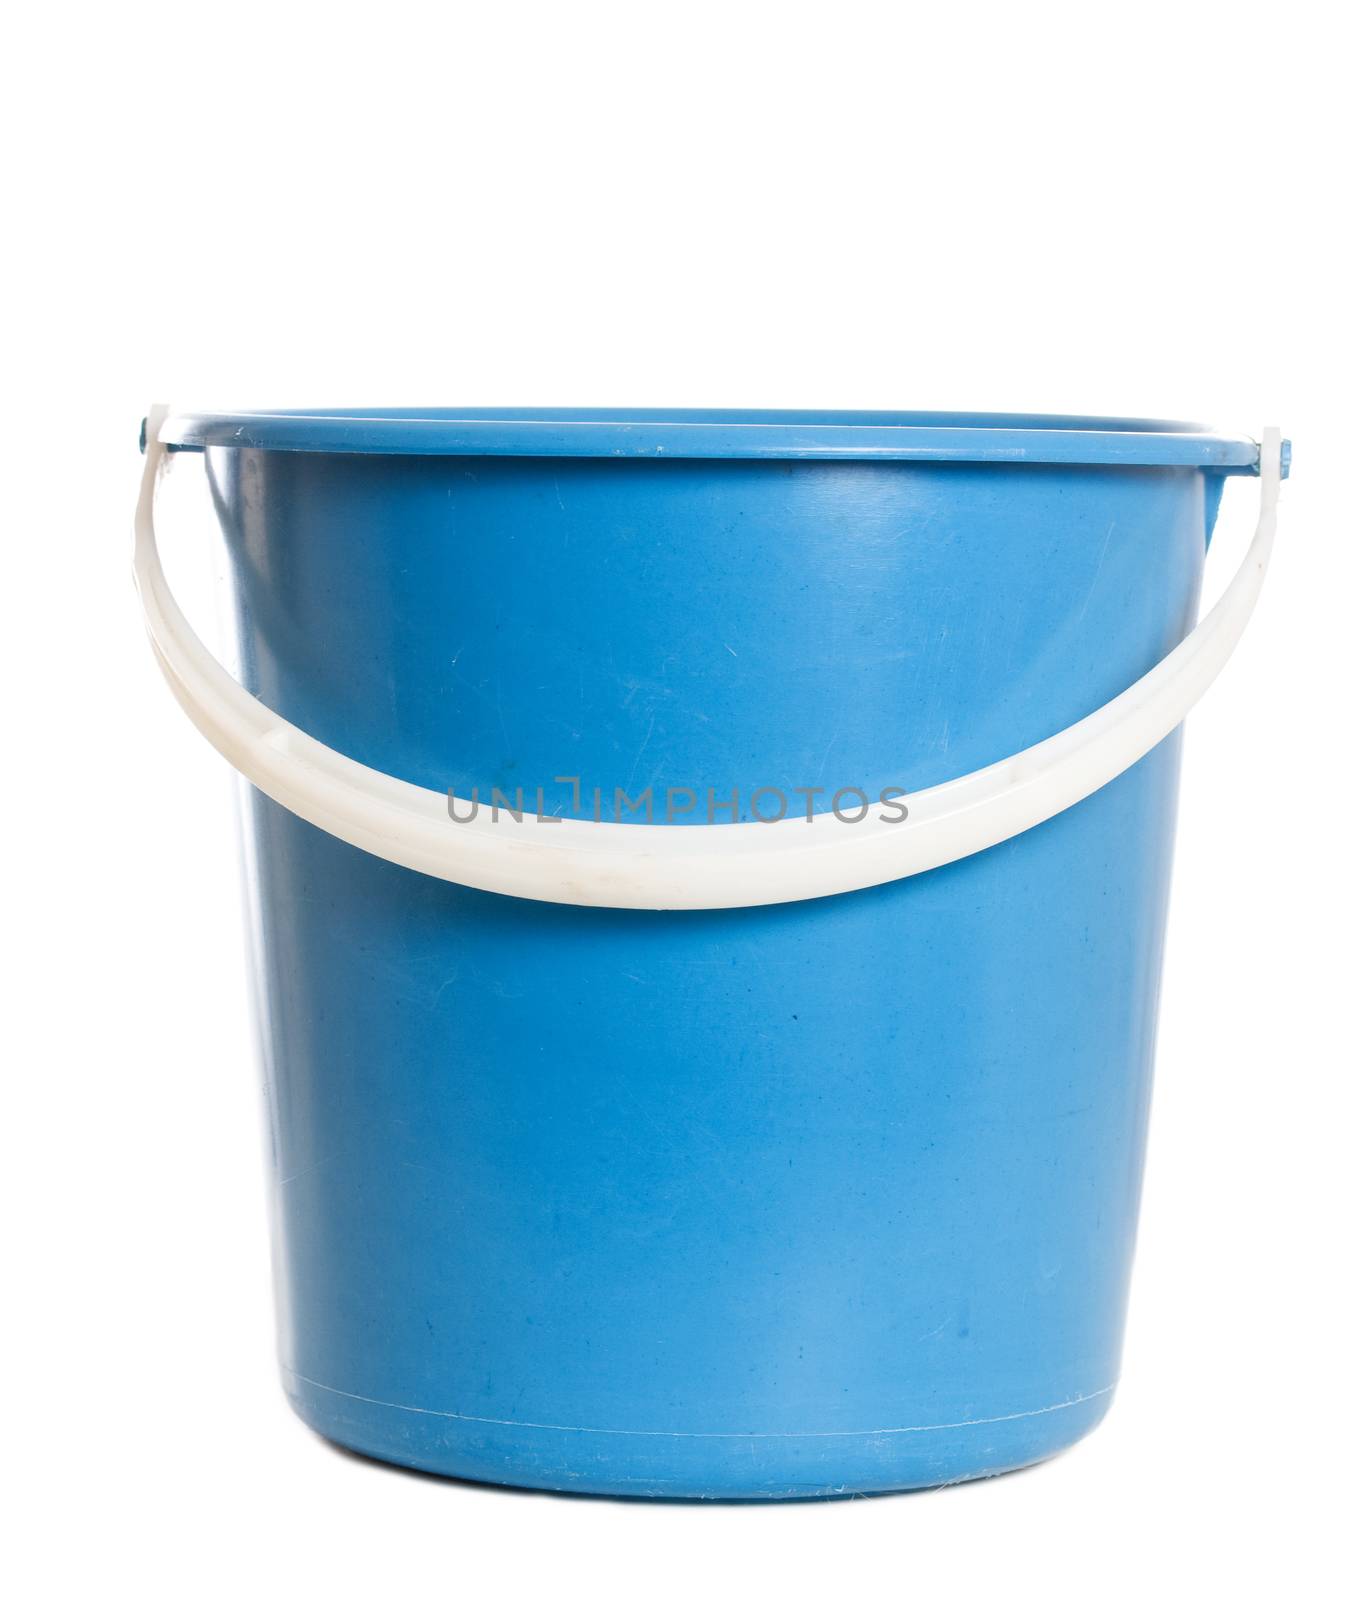 Blue pail by Irina1977